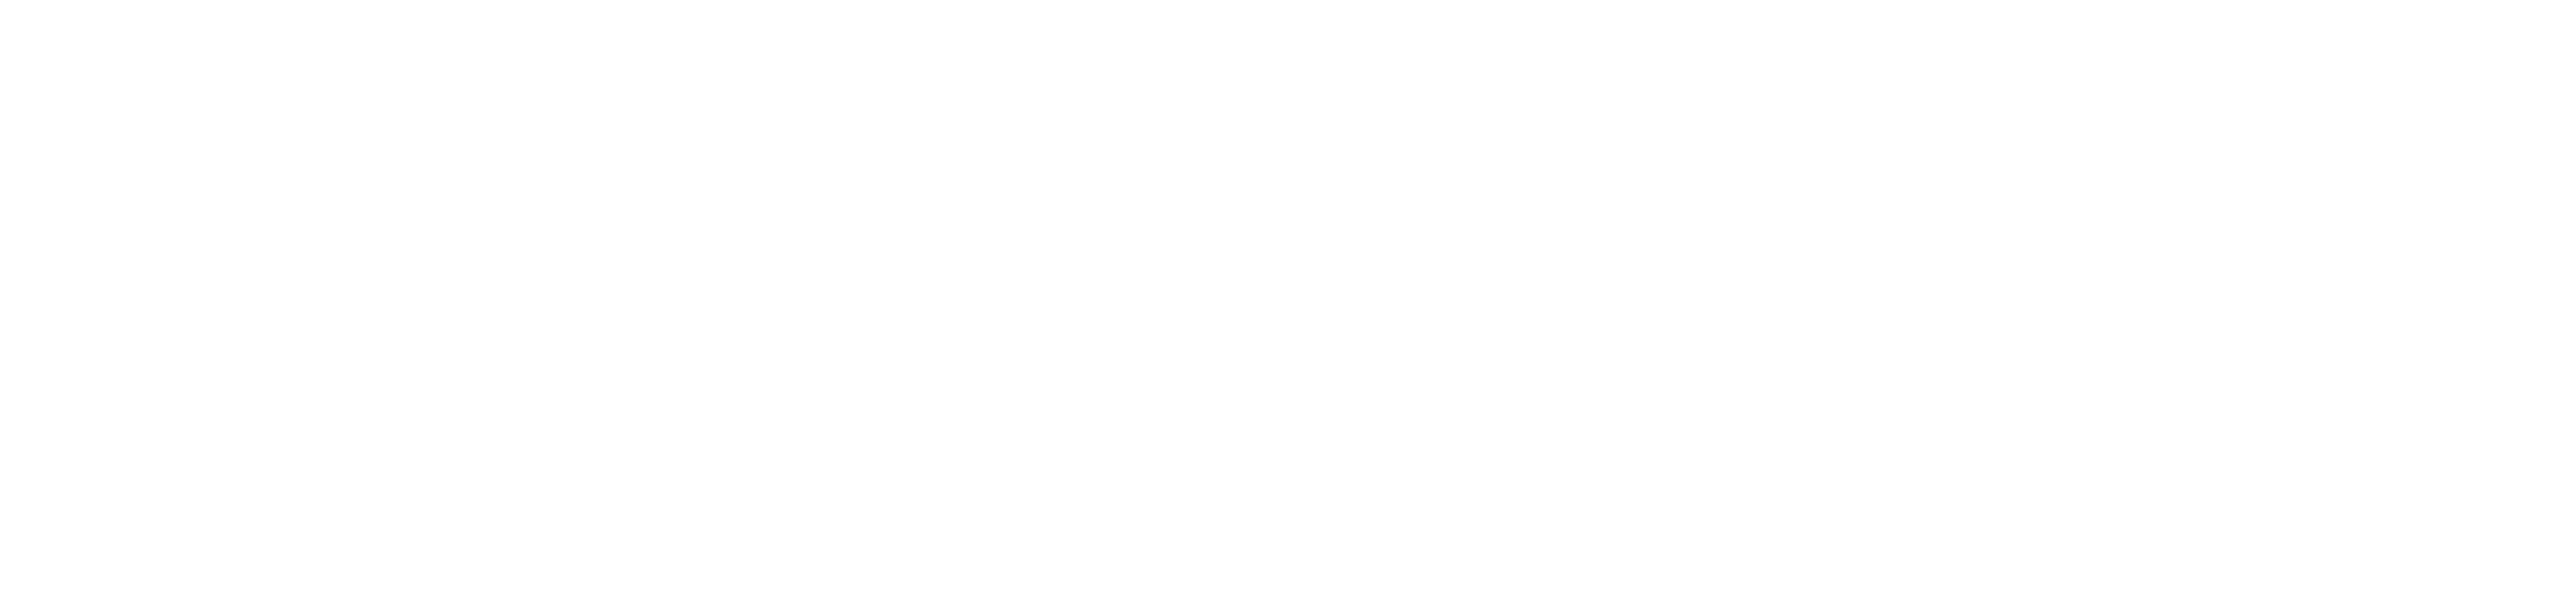 JC Penny Logo - 20 Jc penny png logo for free download on YA-webdesign